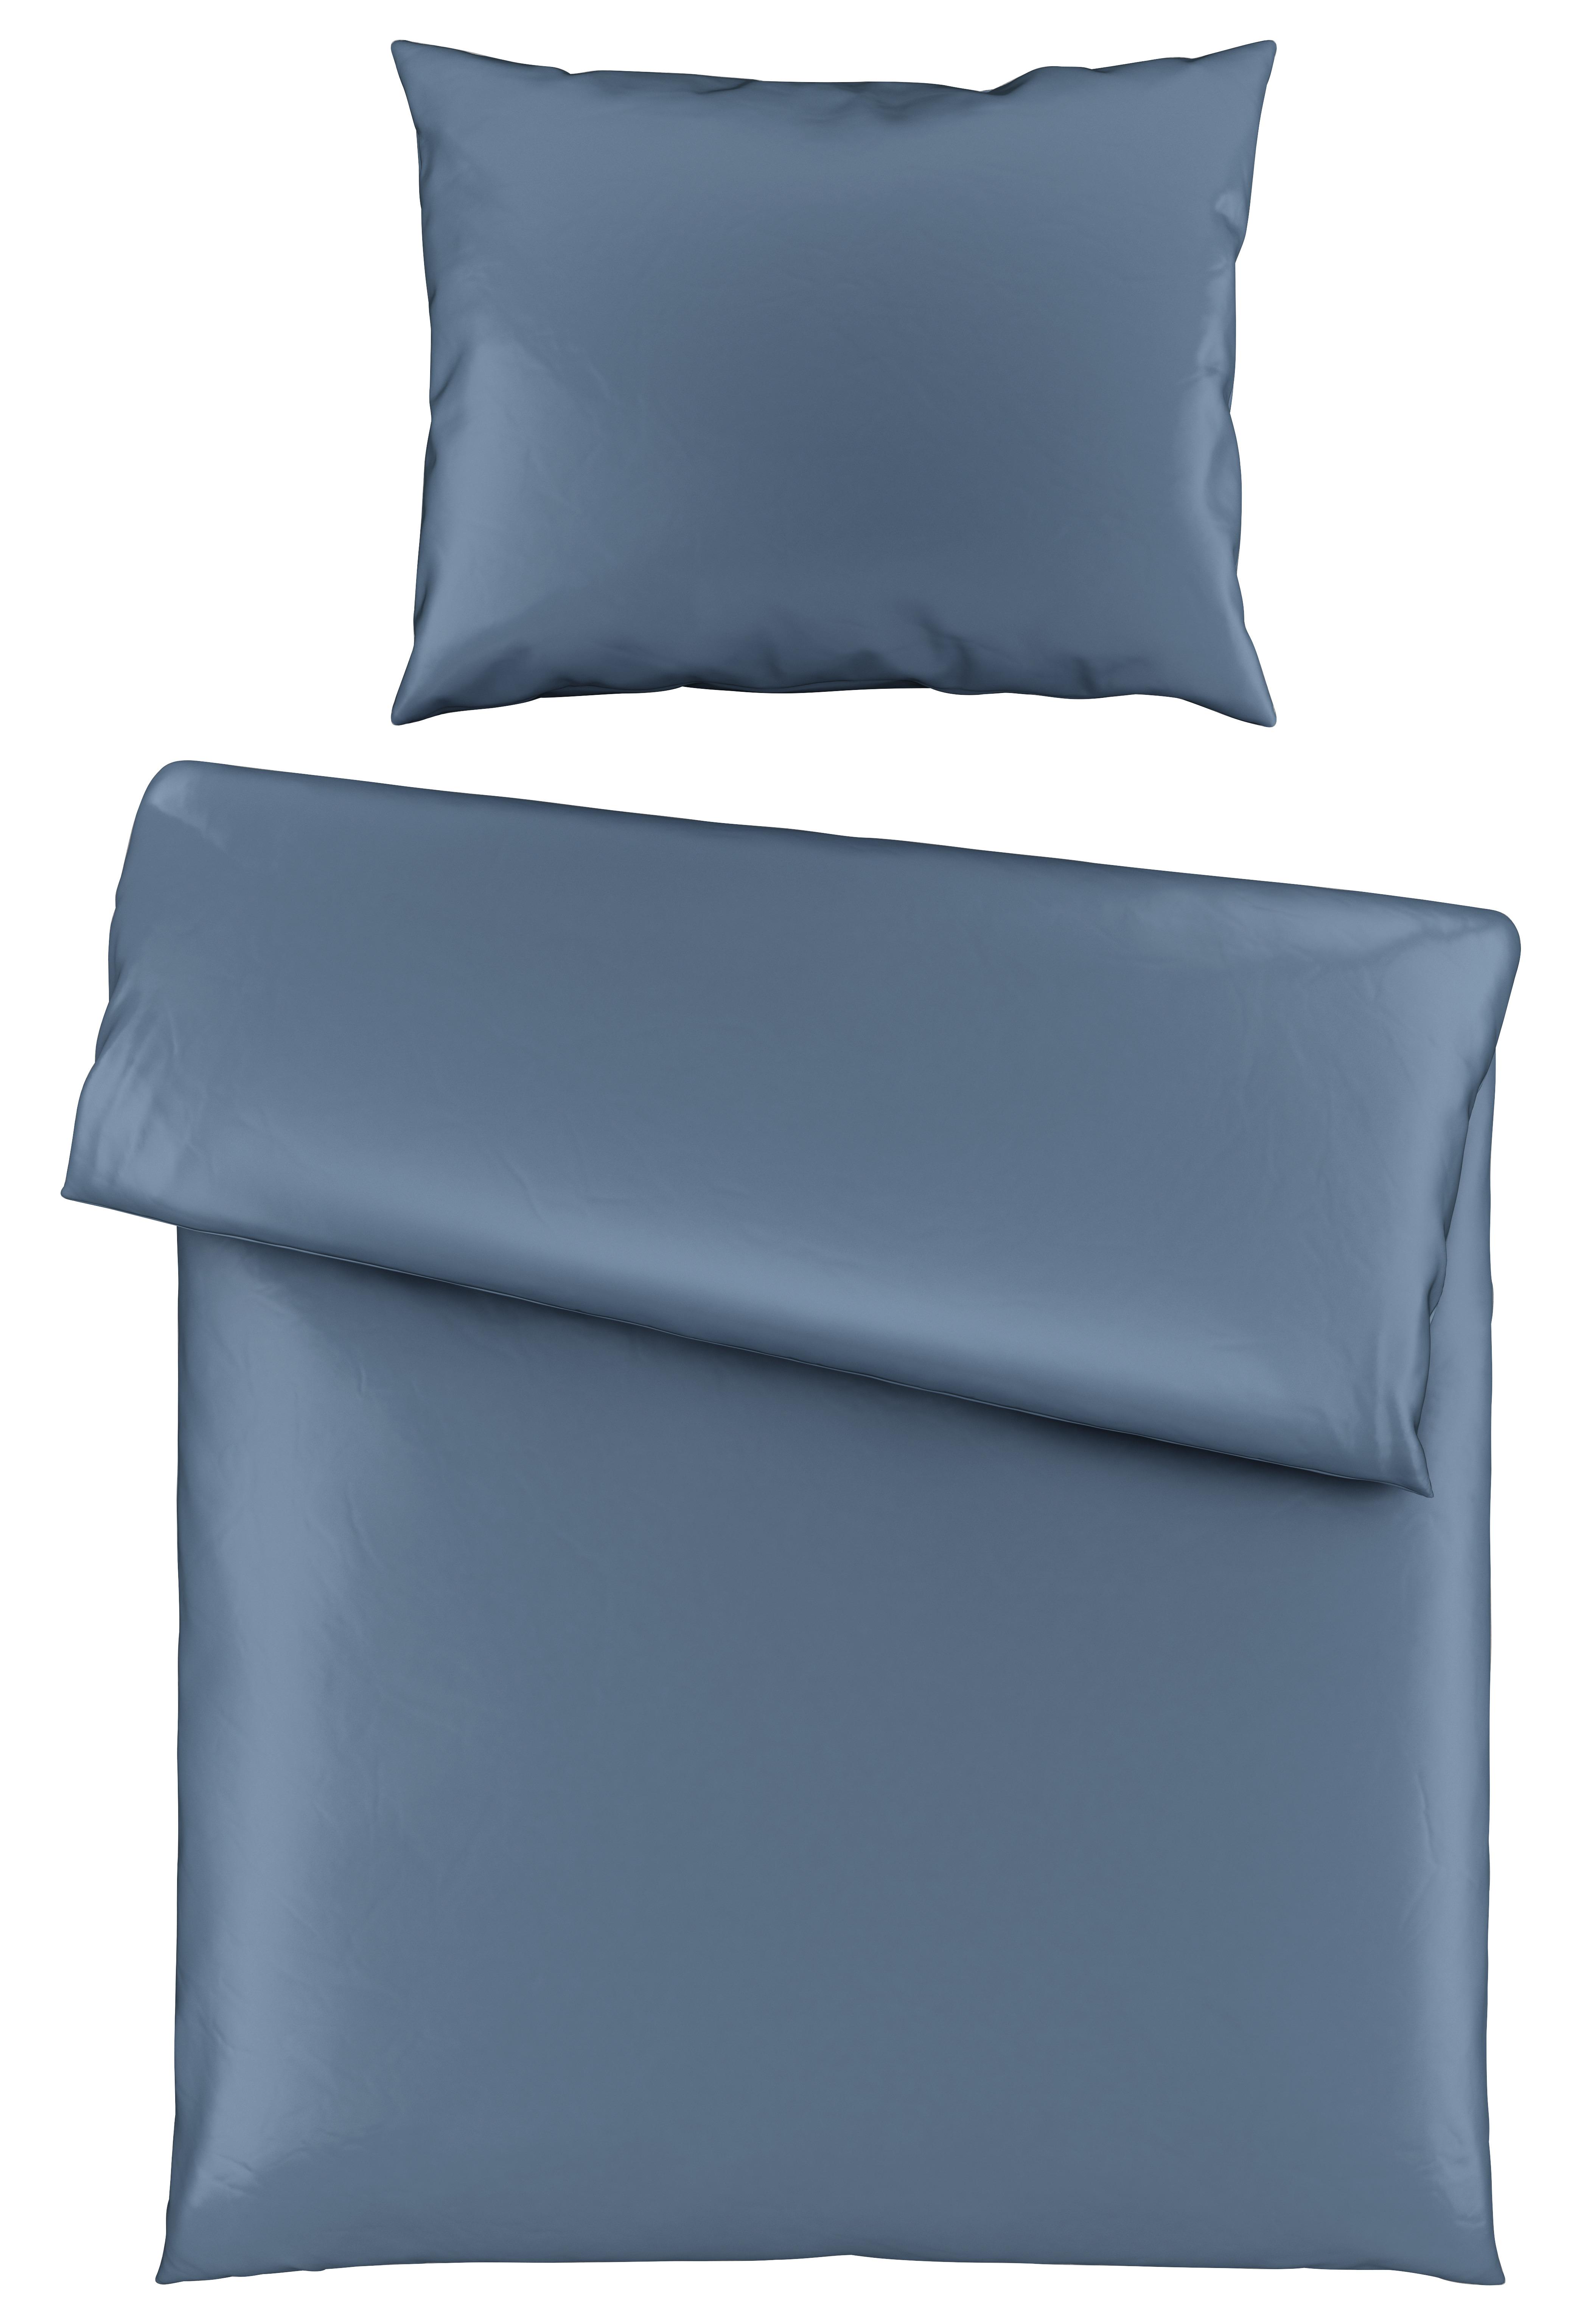 Posteľná Bielizeň Alex Uni, 140/200cm, Modrá - modrá, Moderný, textil (140/200cm) - Premium Living